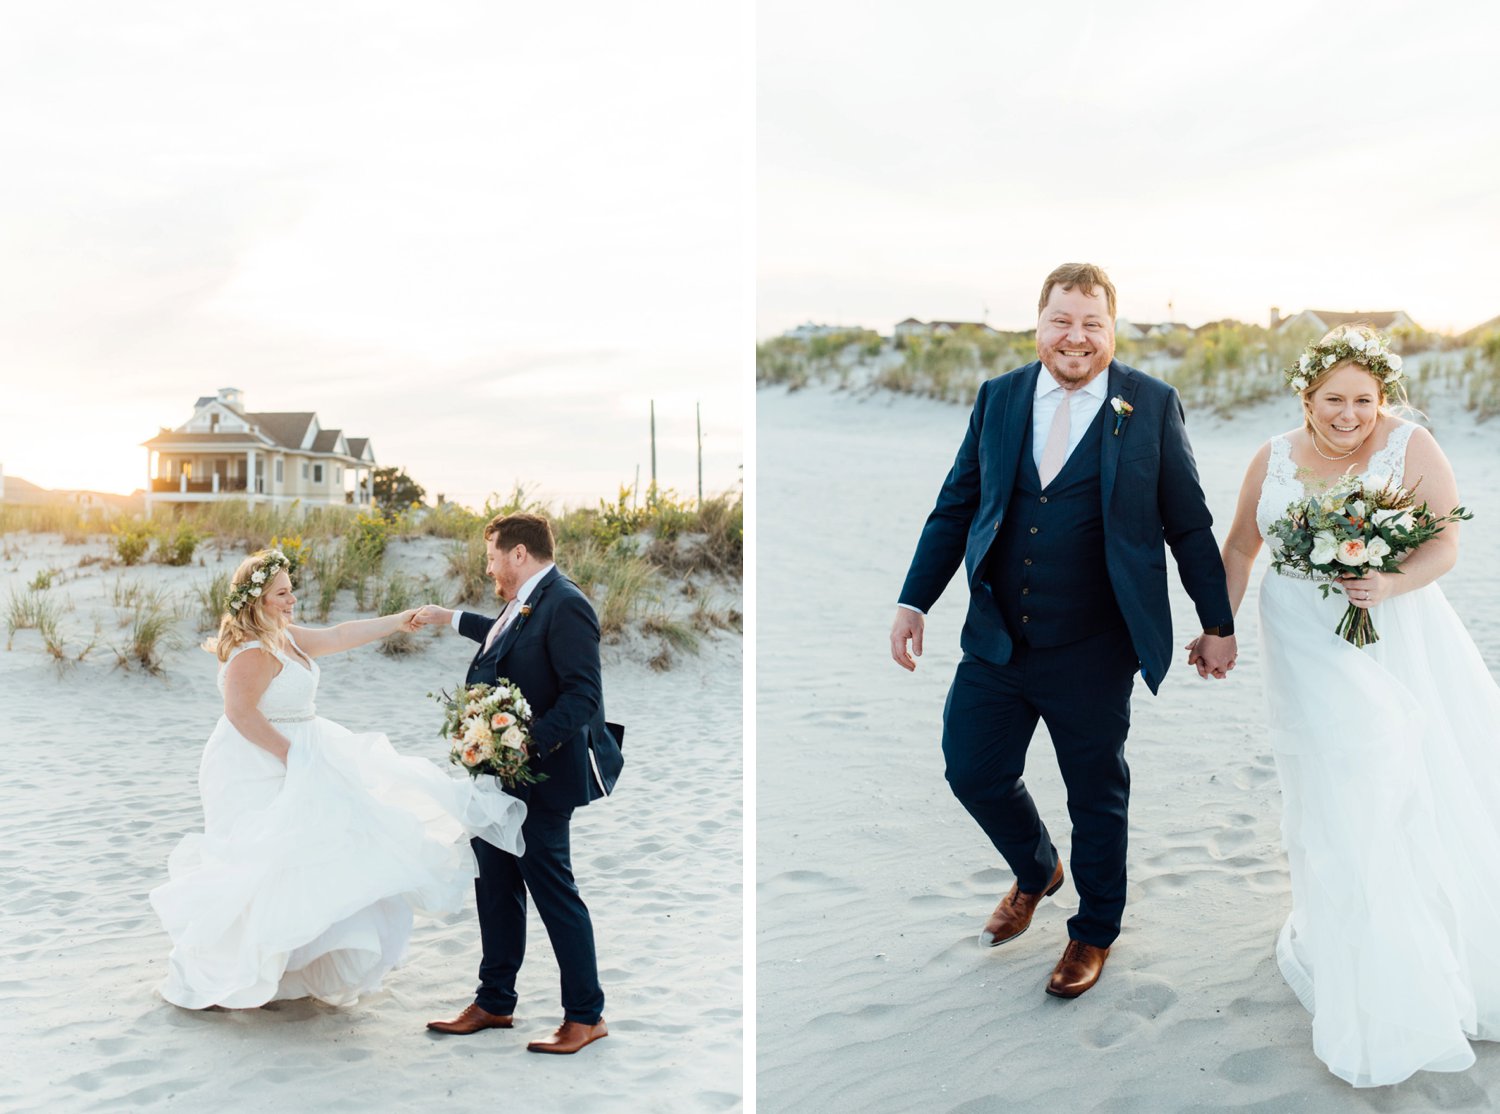 Rose + Corey - Ocean City Wedding - New Jersey Wedding Photographer - Alison Dunn Photography photo